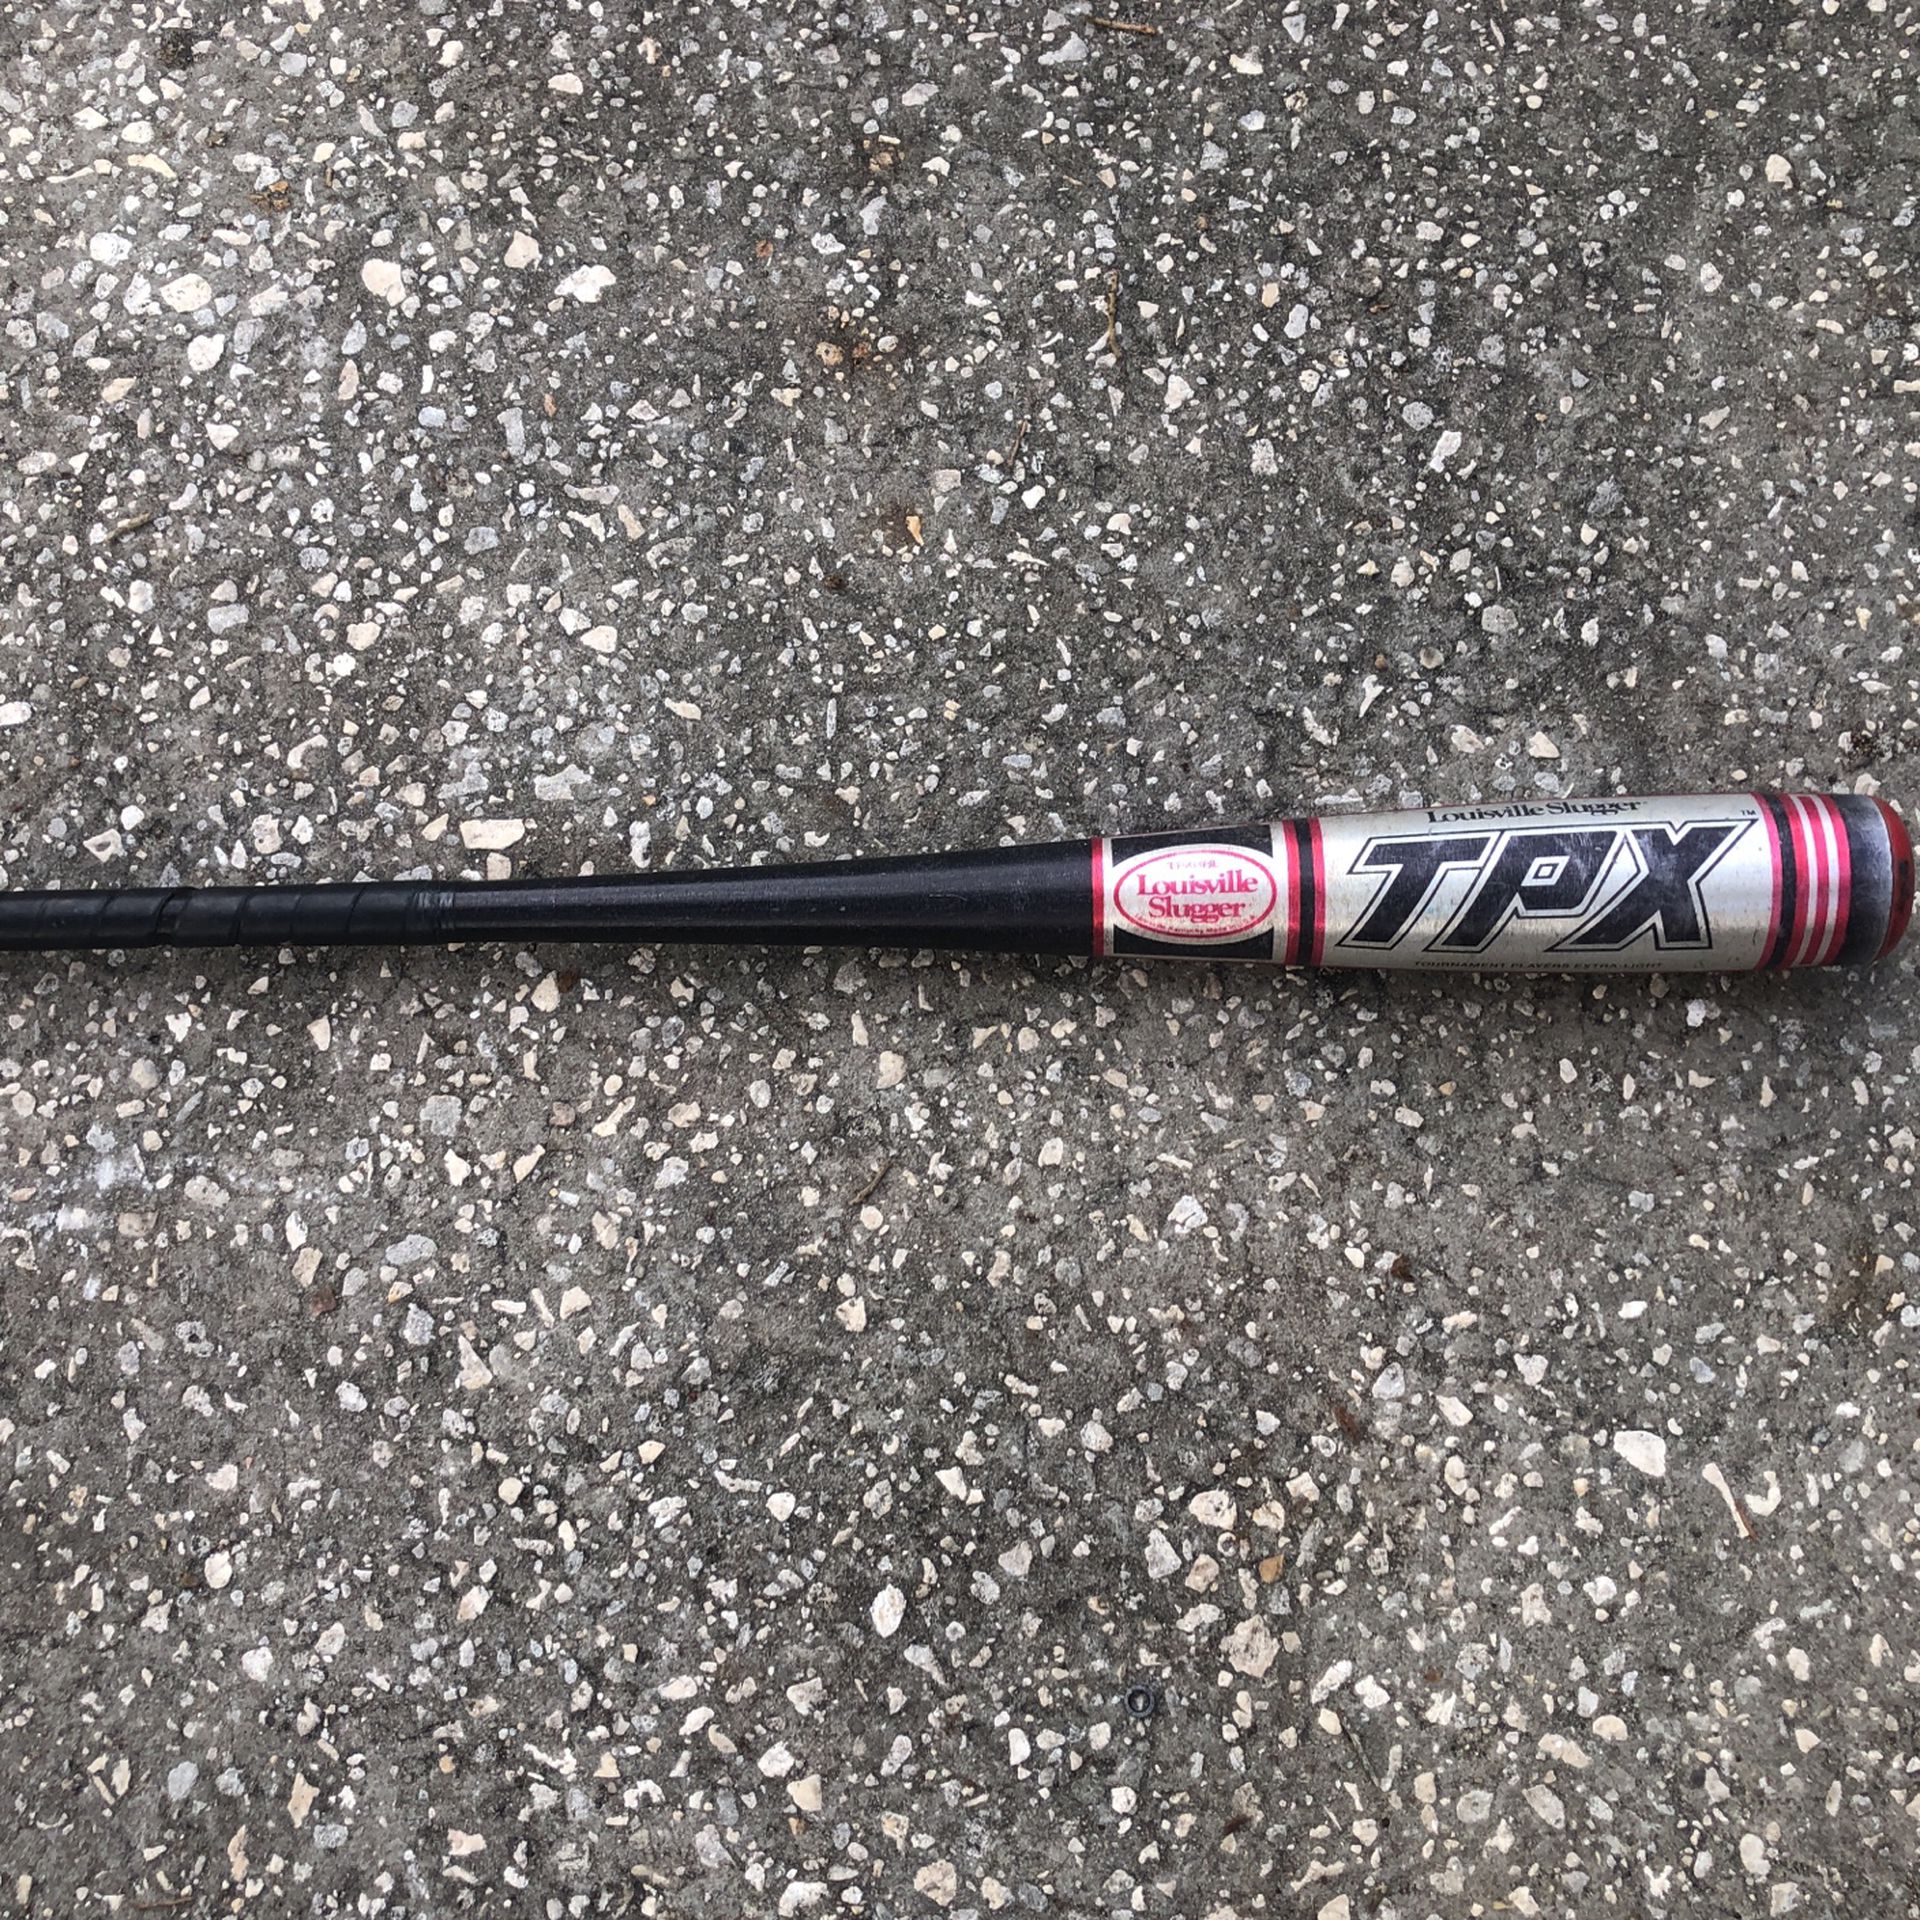 Louisville slugger TBX Aluminum bat